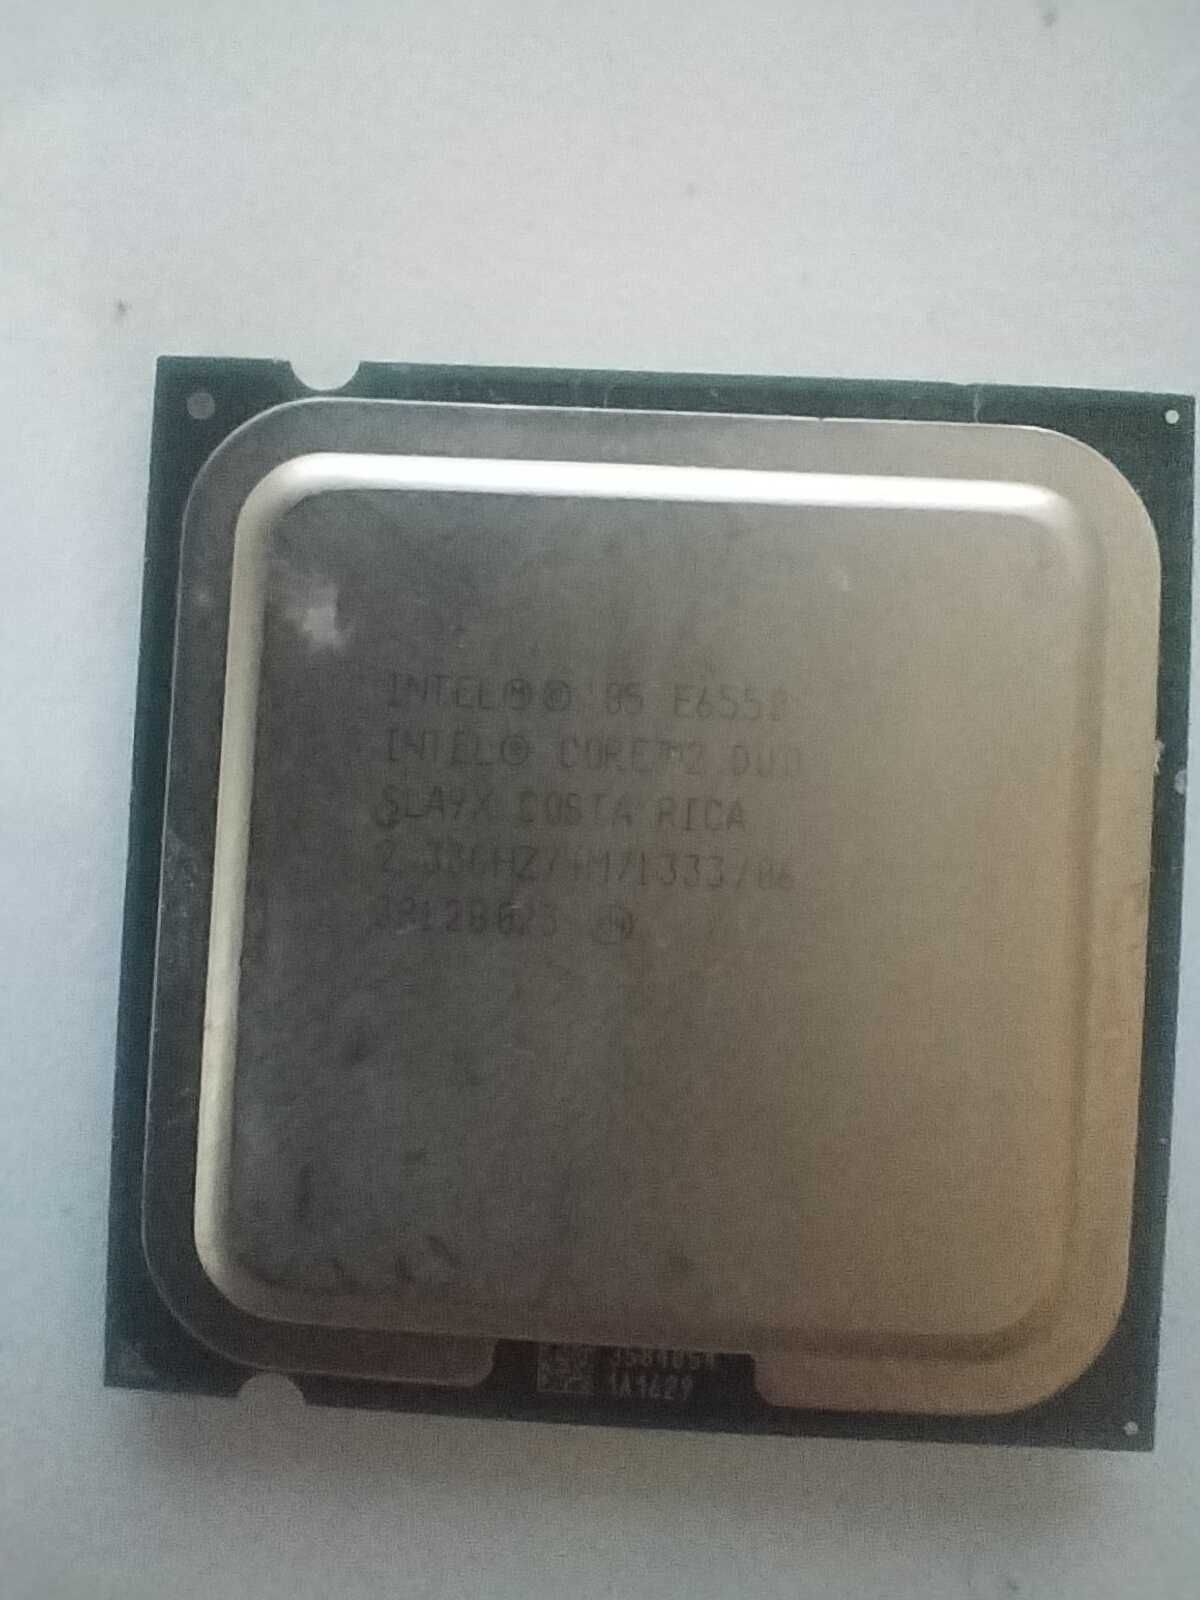 Cpu Intel Core 2 Duo E 6550 2.33GHz 4MB/1333MHz LGA 775 desktop